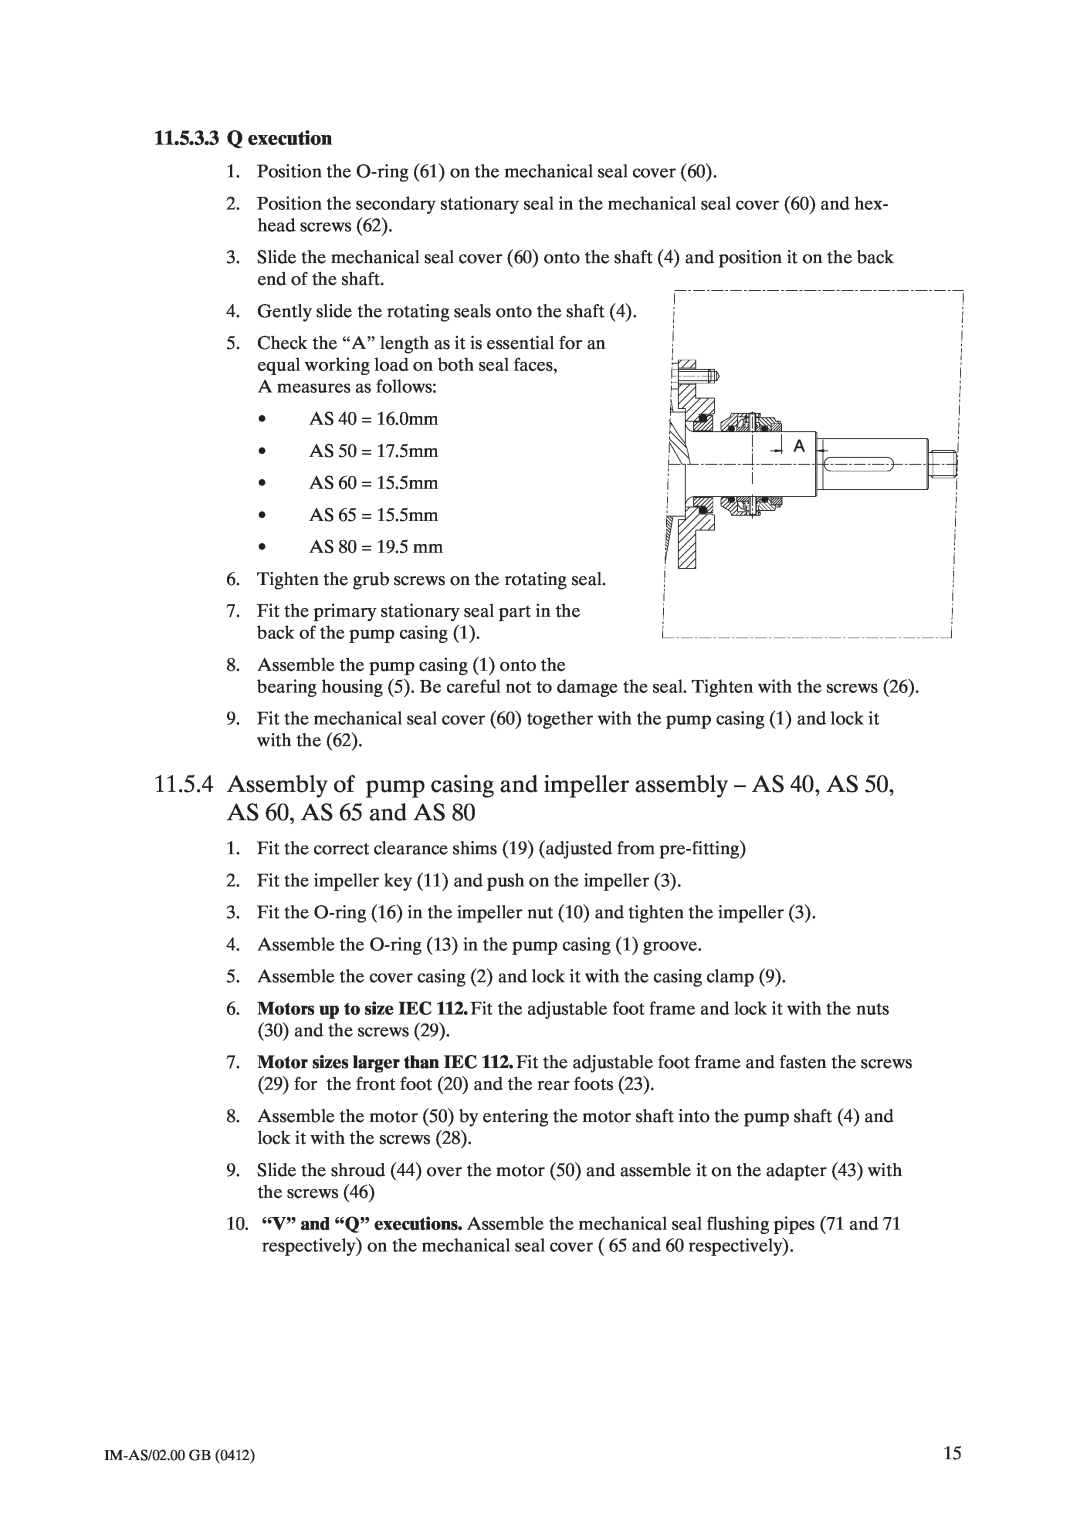 Johnson Controls AS instruction manual 11.5.3.3Q execution 